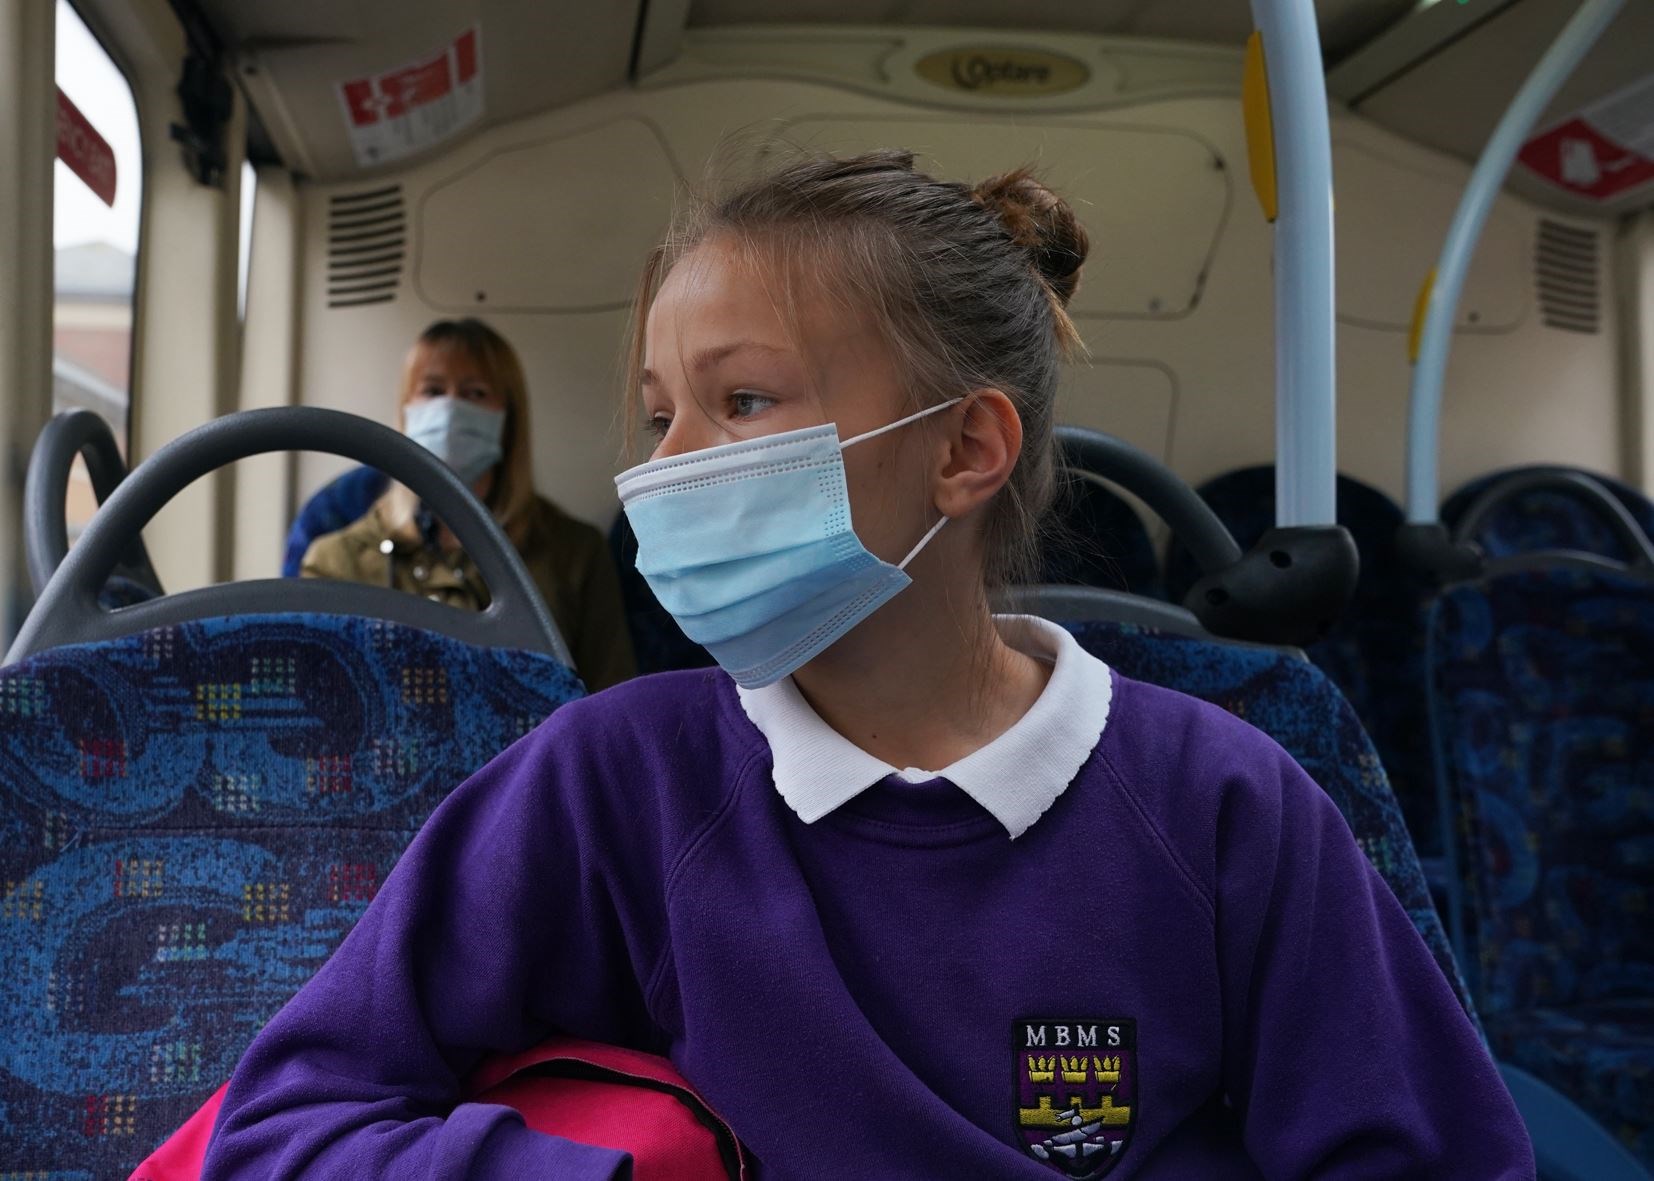 A school pupil wearing a face mask on a bus (Owen Humphreys/PA)